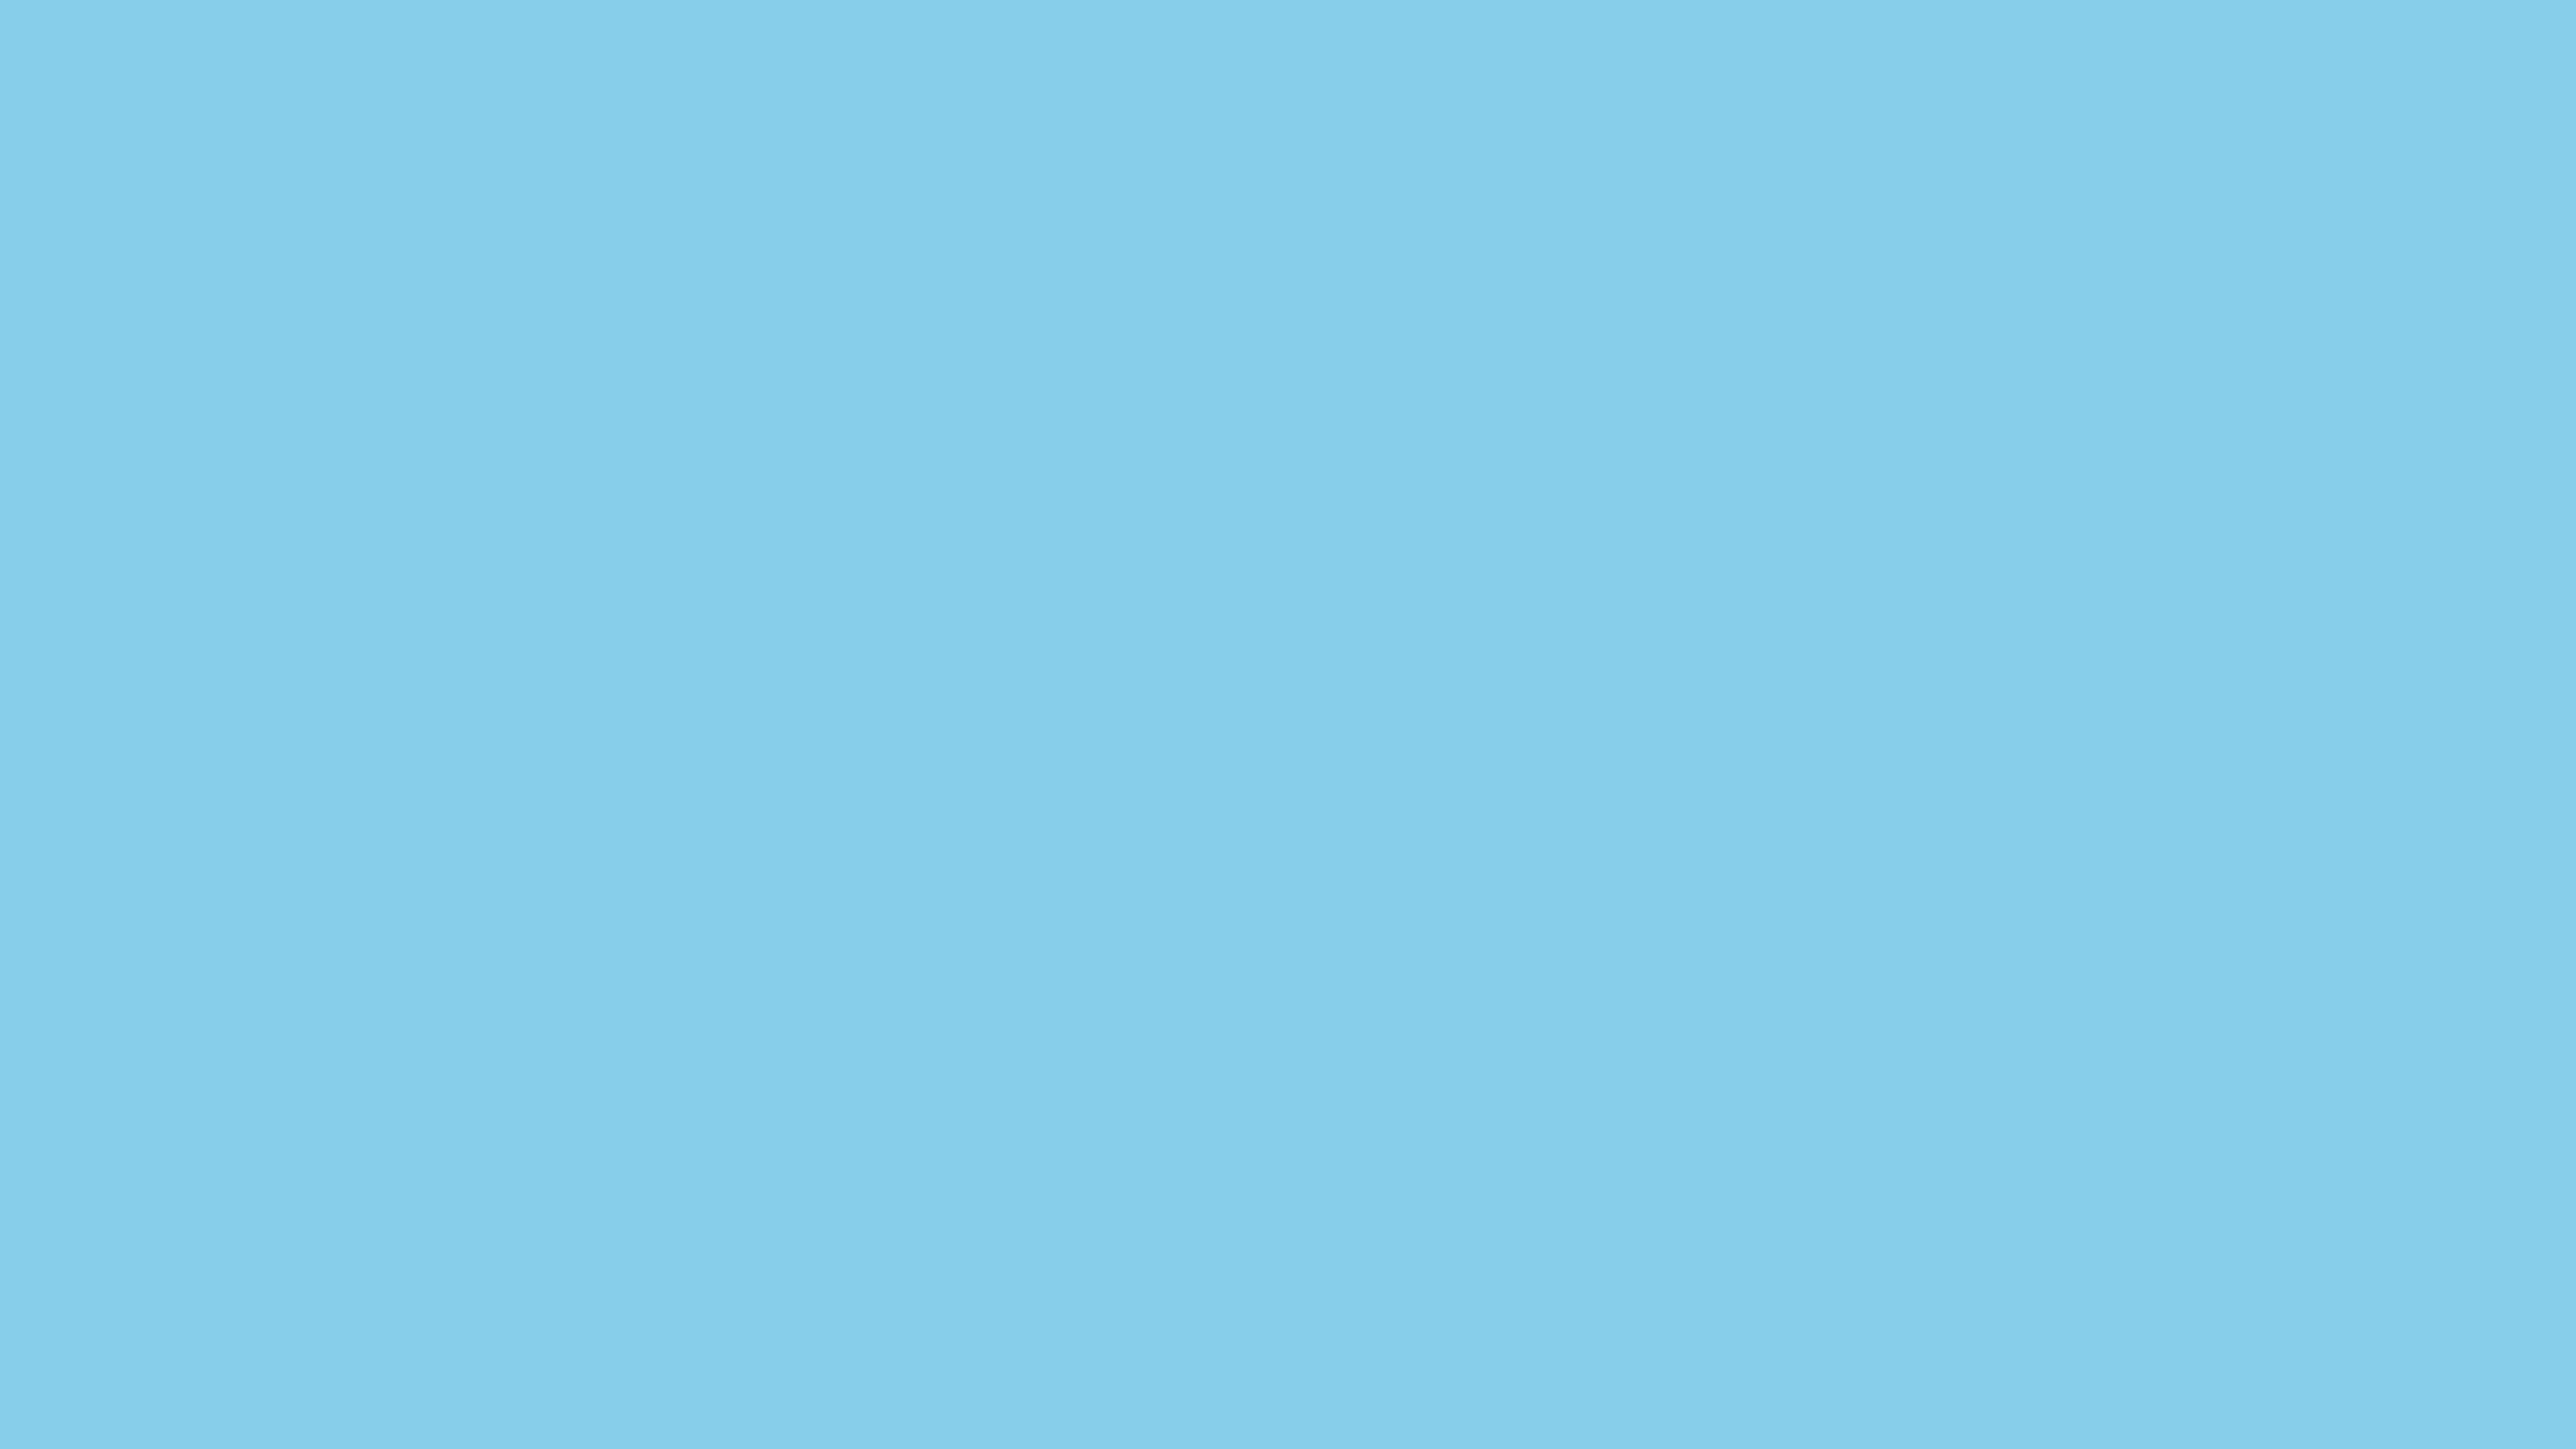 7680x4320 Sky Blue Solid Color Background